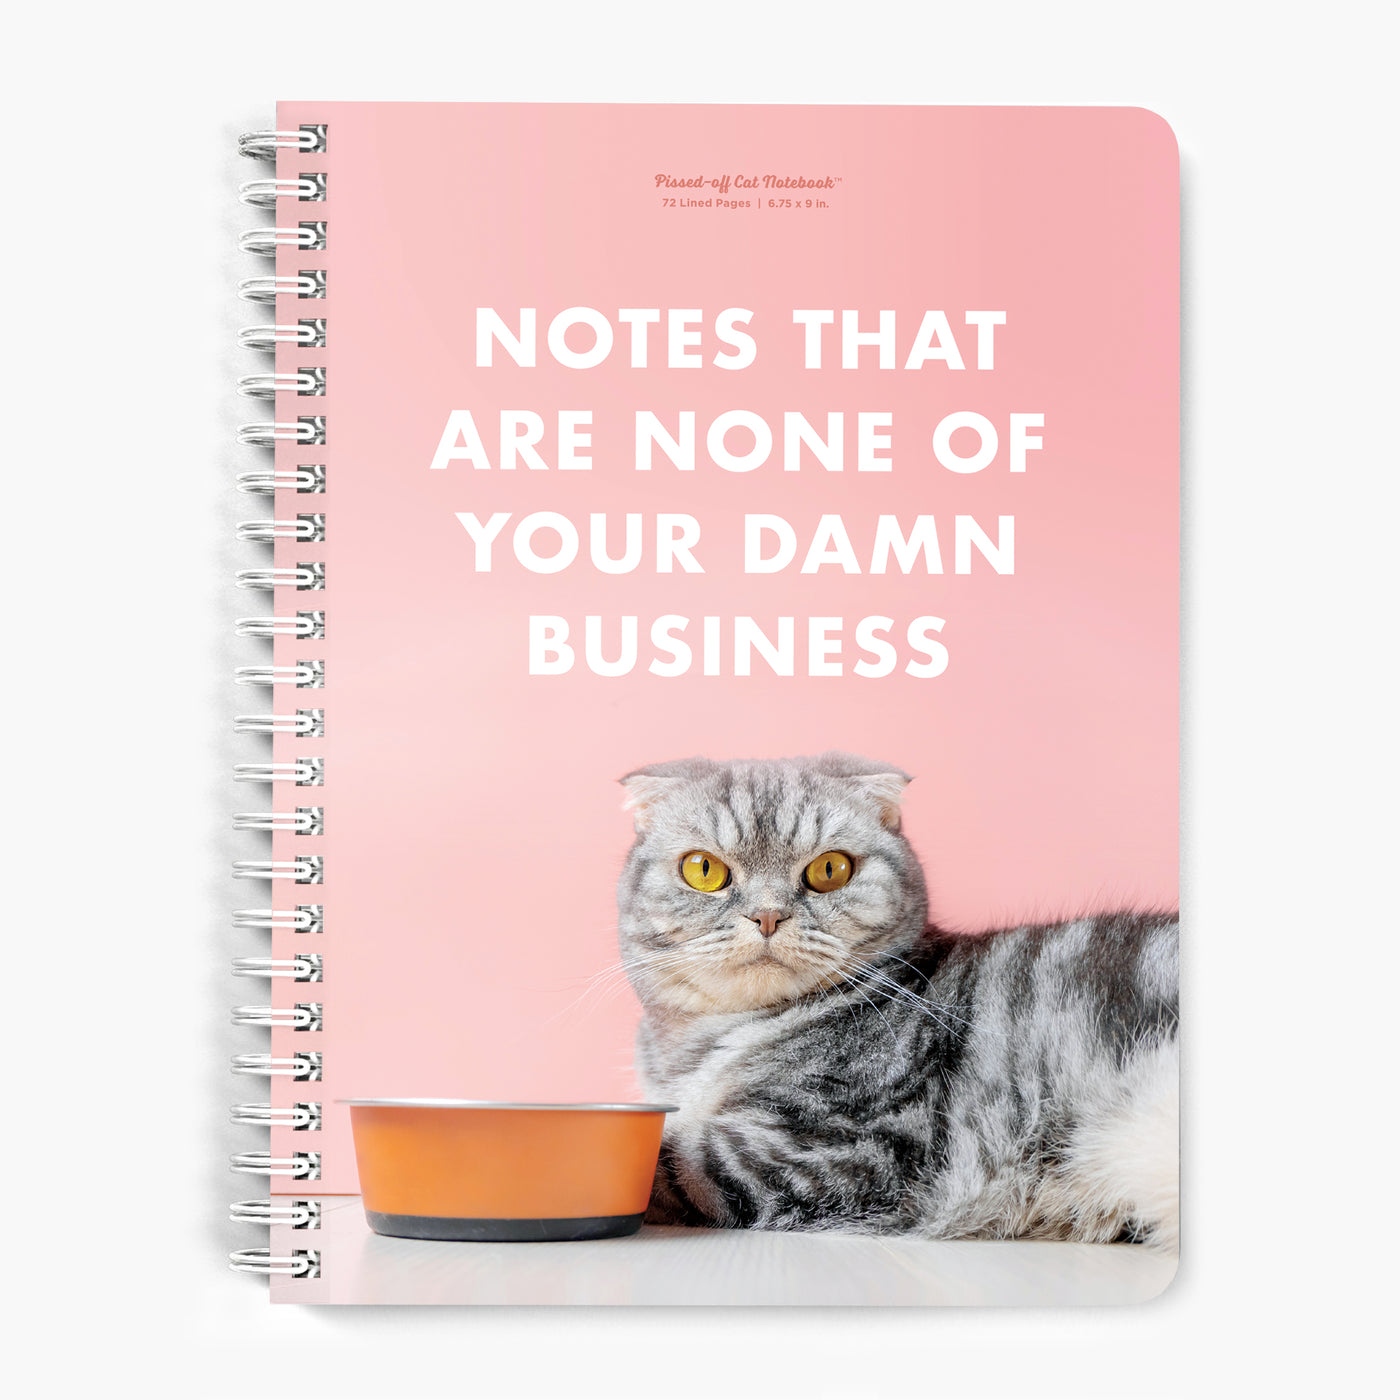 Damn Business Pissed-Off Cat Notebook